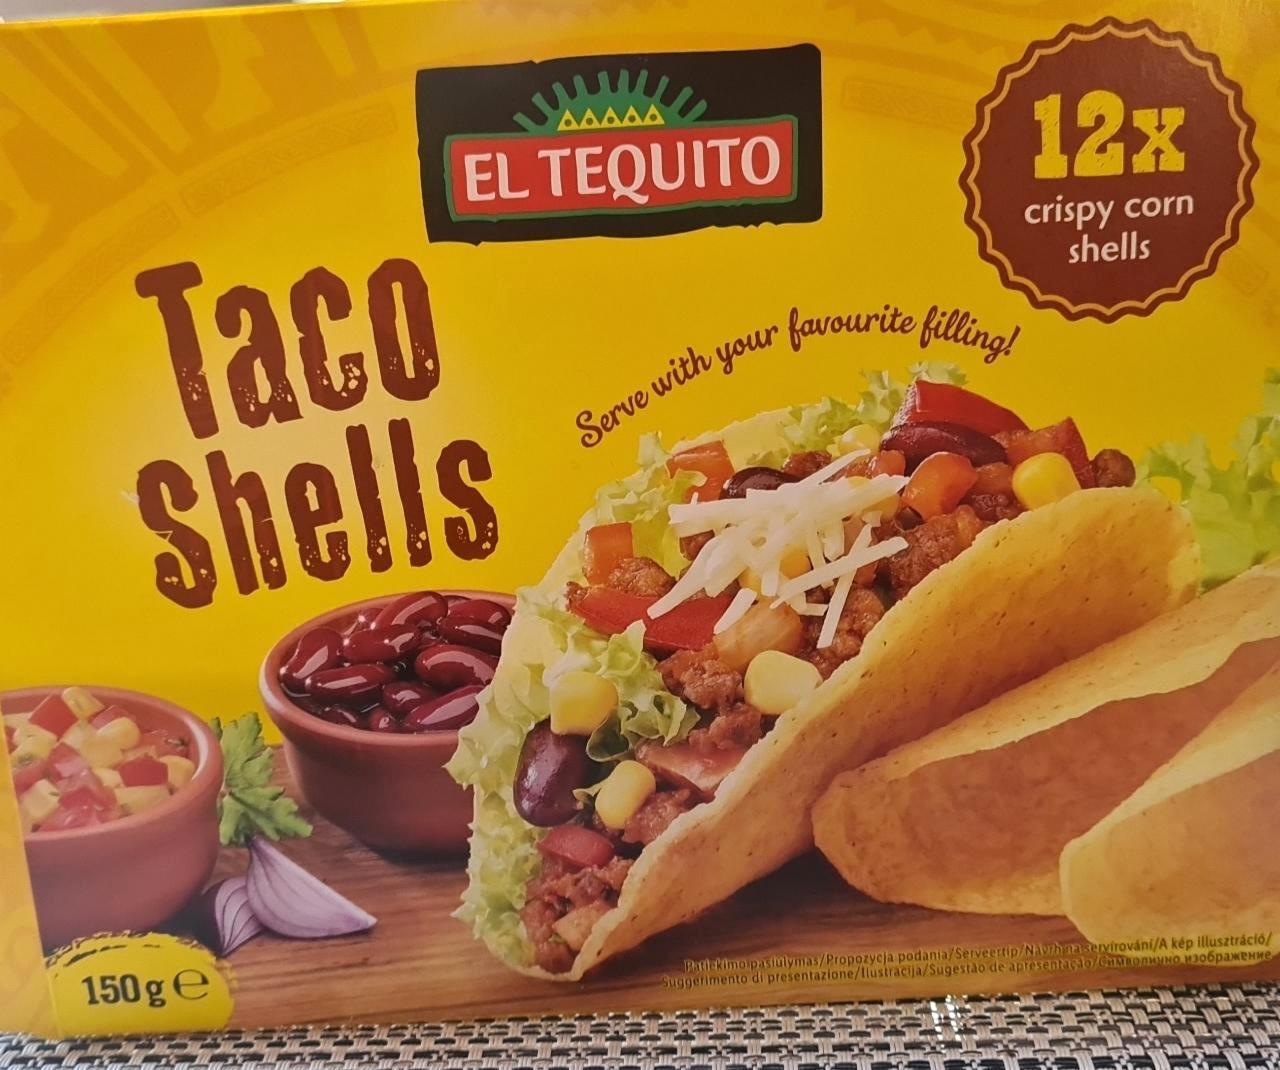 Képek - Taco Schells El Tequito